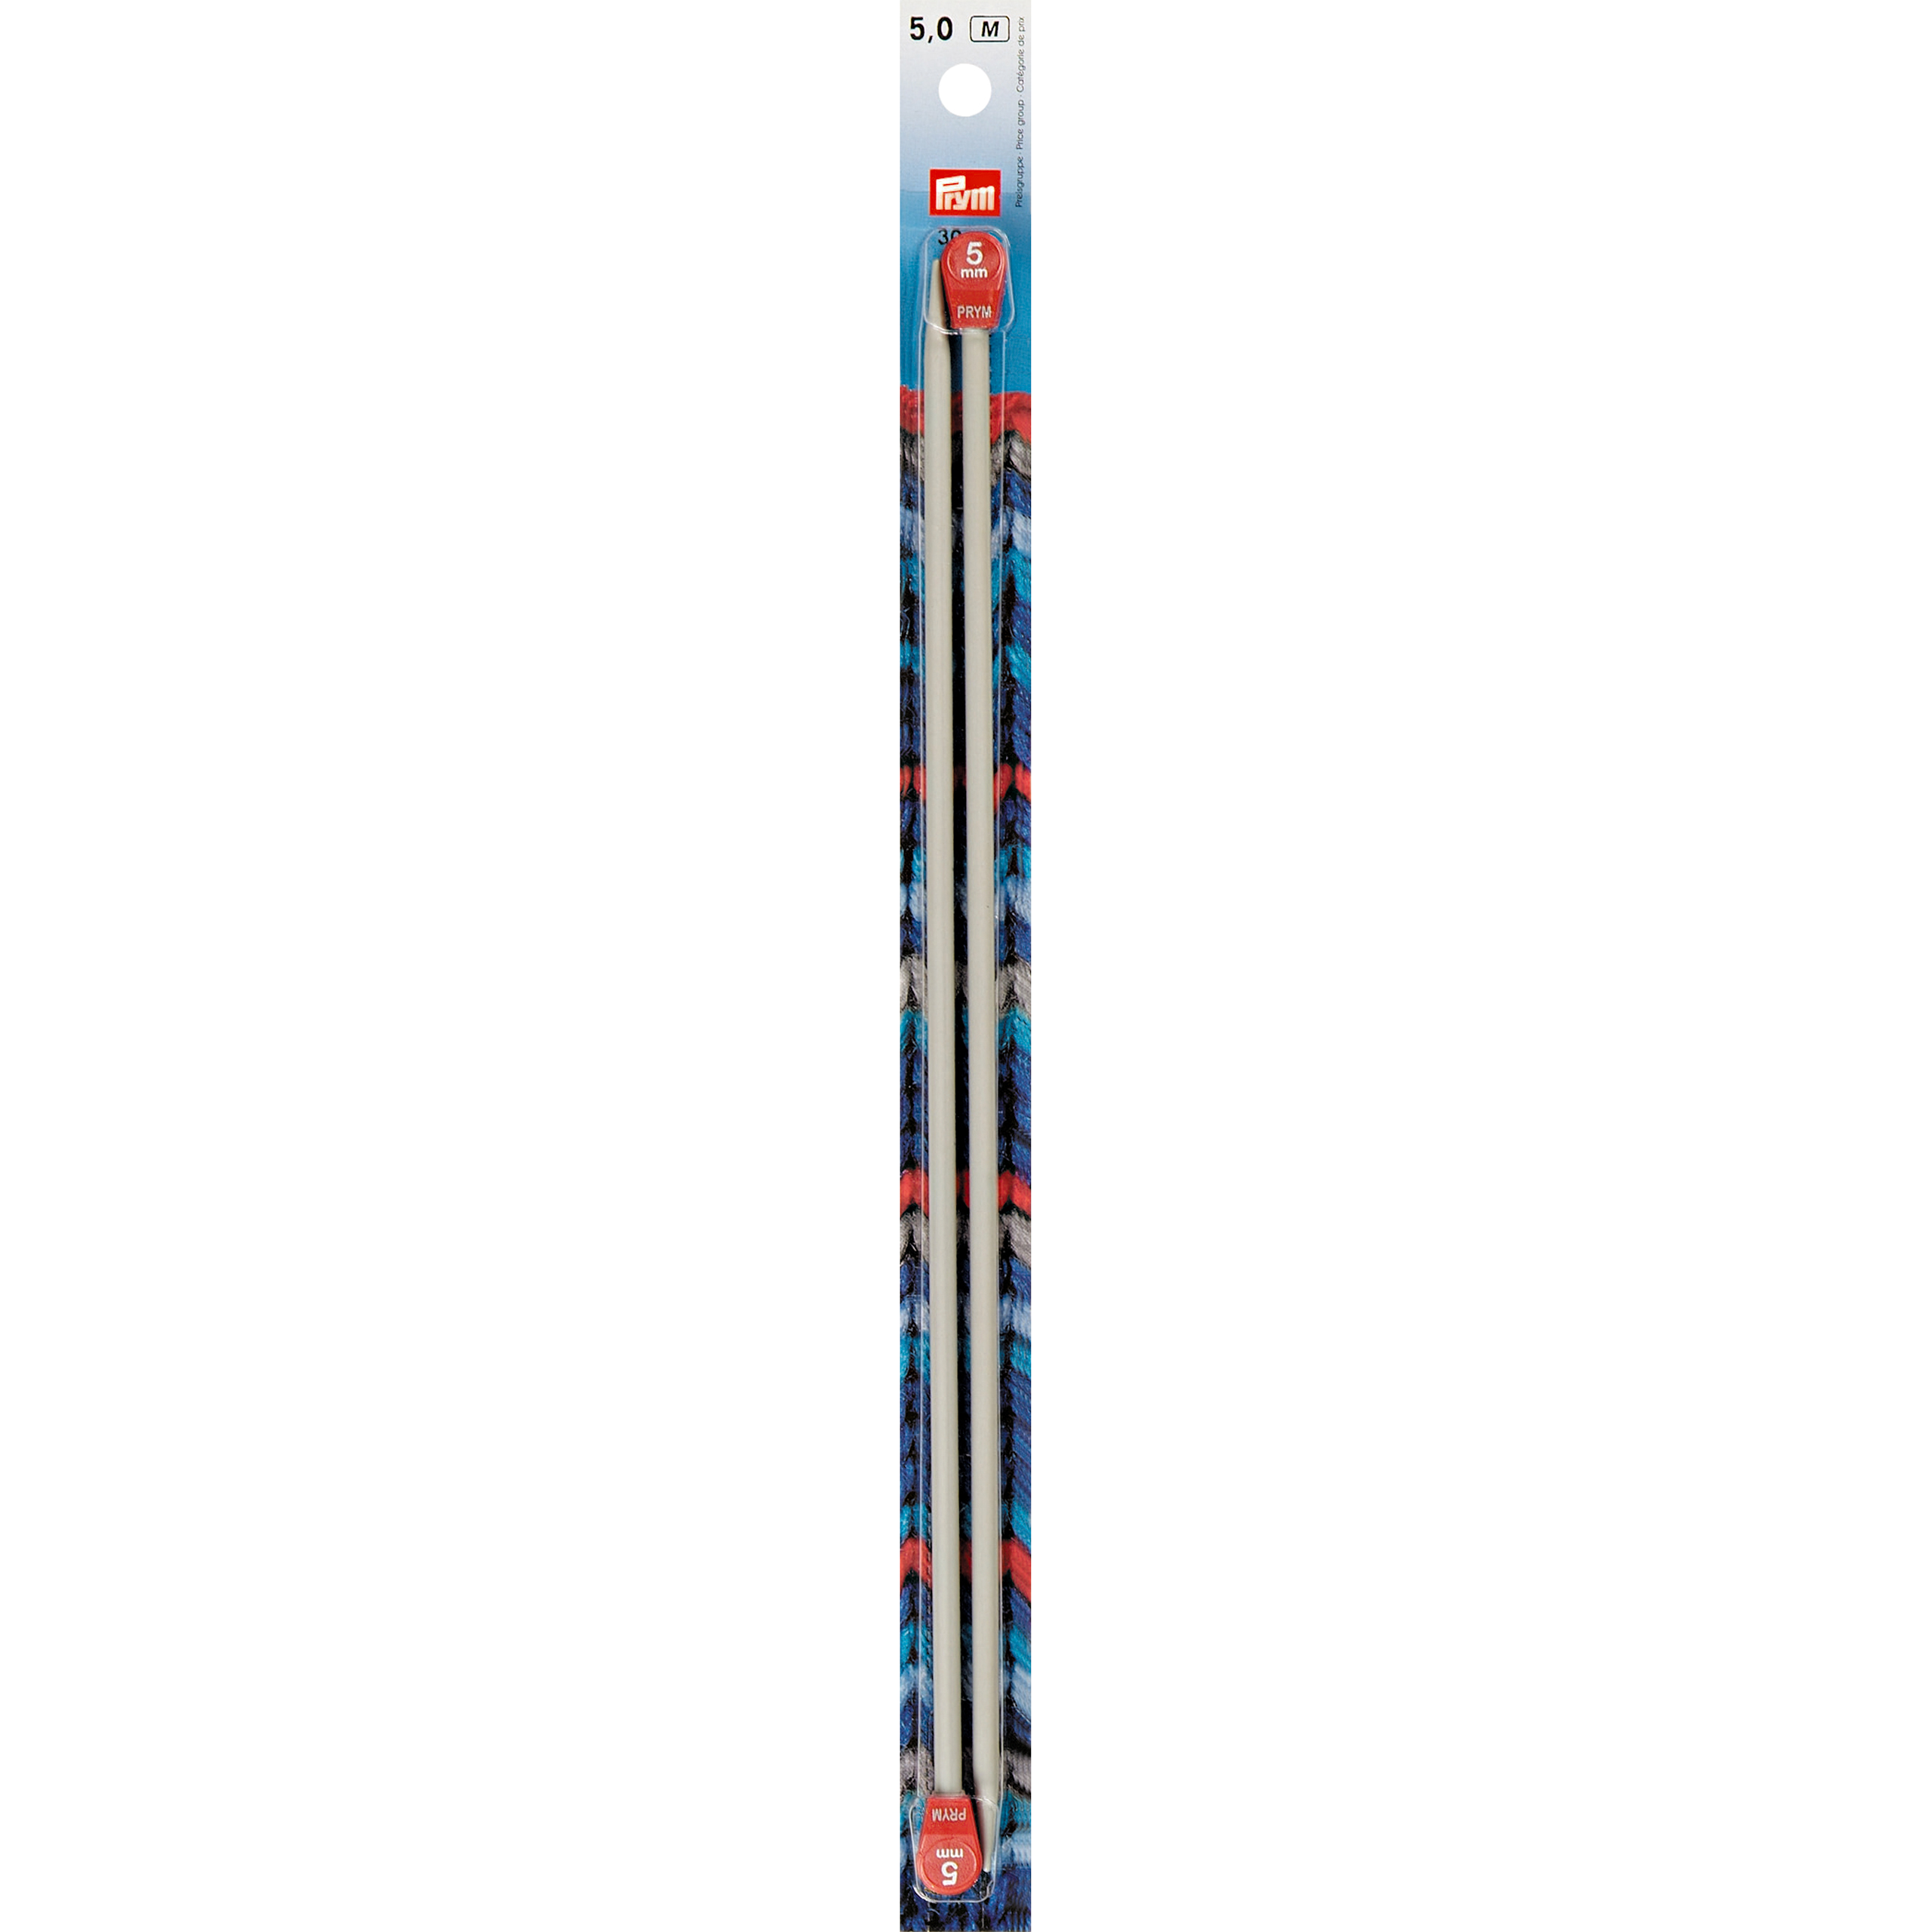 Knitting Needles - 5mm Straight 30cm Long by Prym 191 456